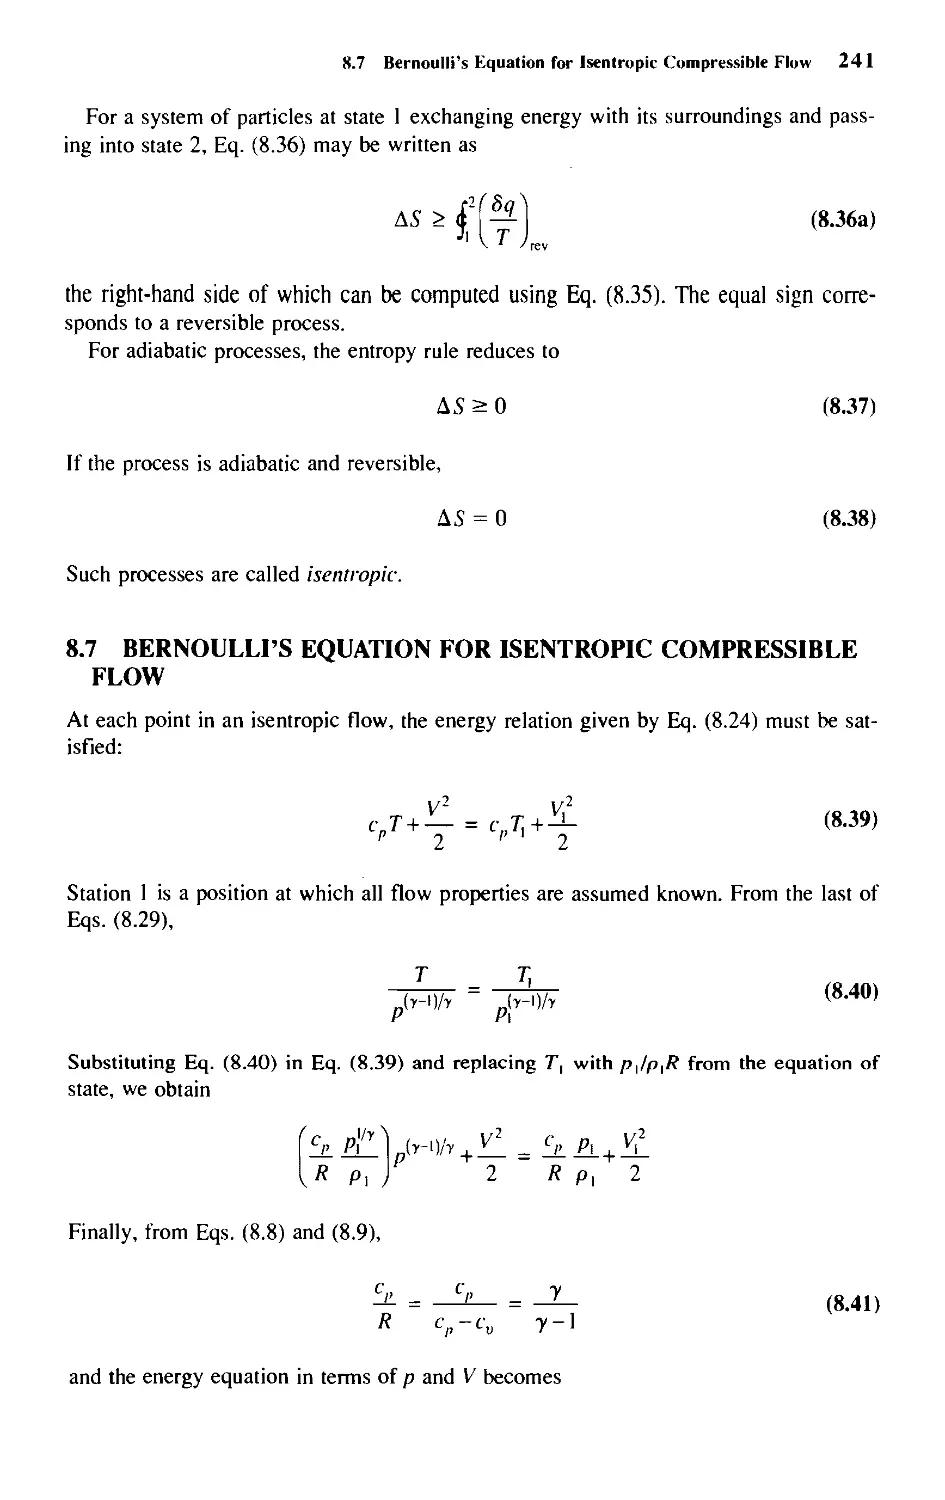 8.7 - Bernoulli's Equation for Isentropic Compressible Flow